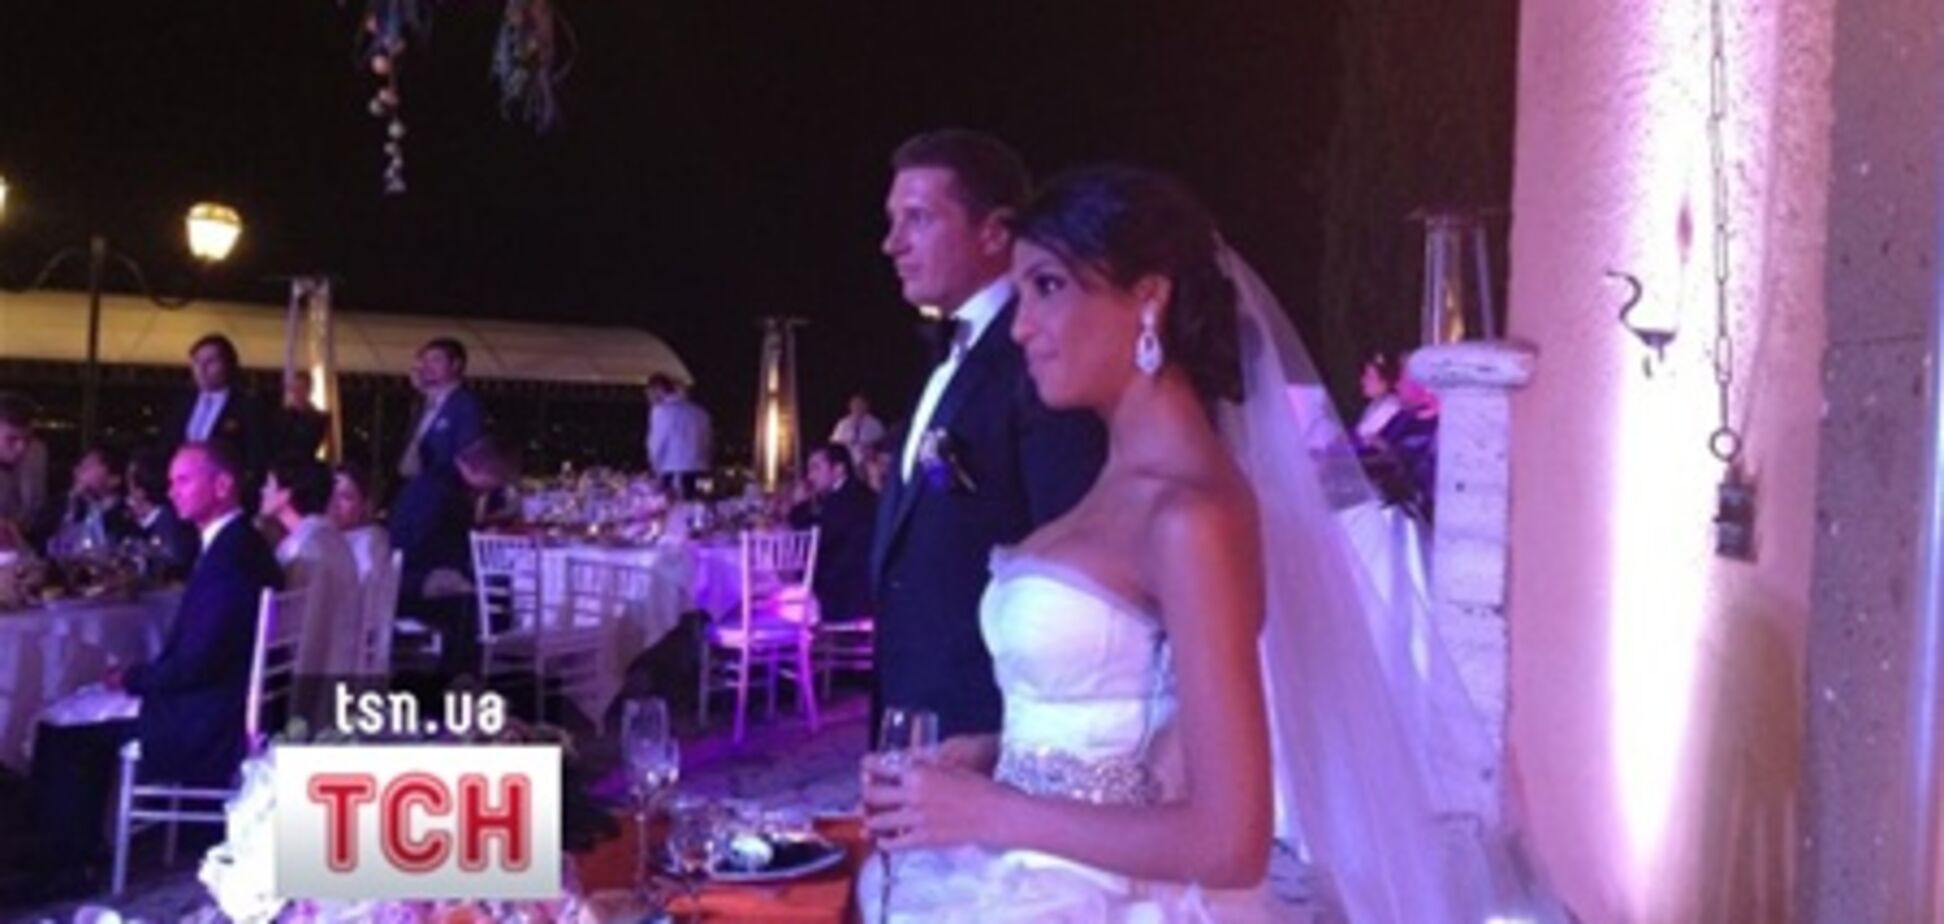 Димопулос + Самсоненко – самая дорогая свадьба года?